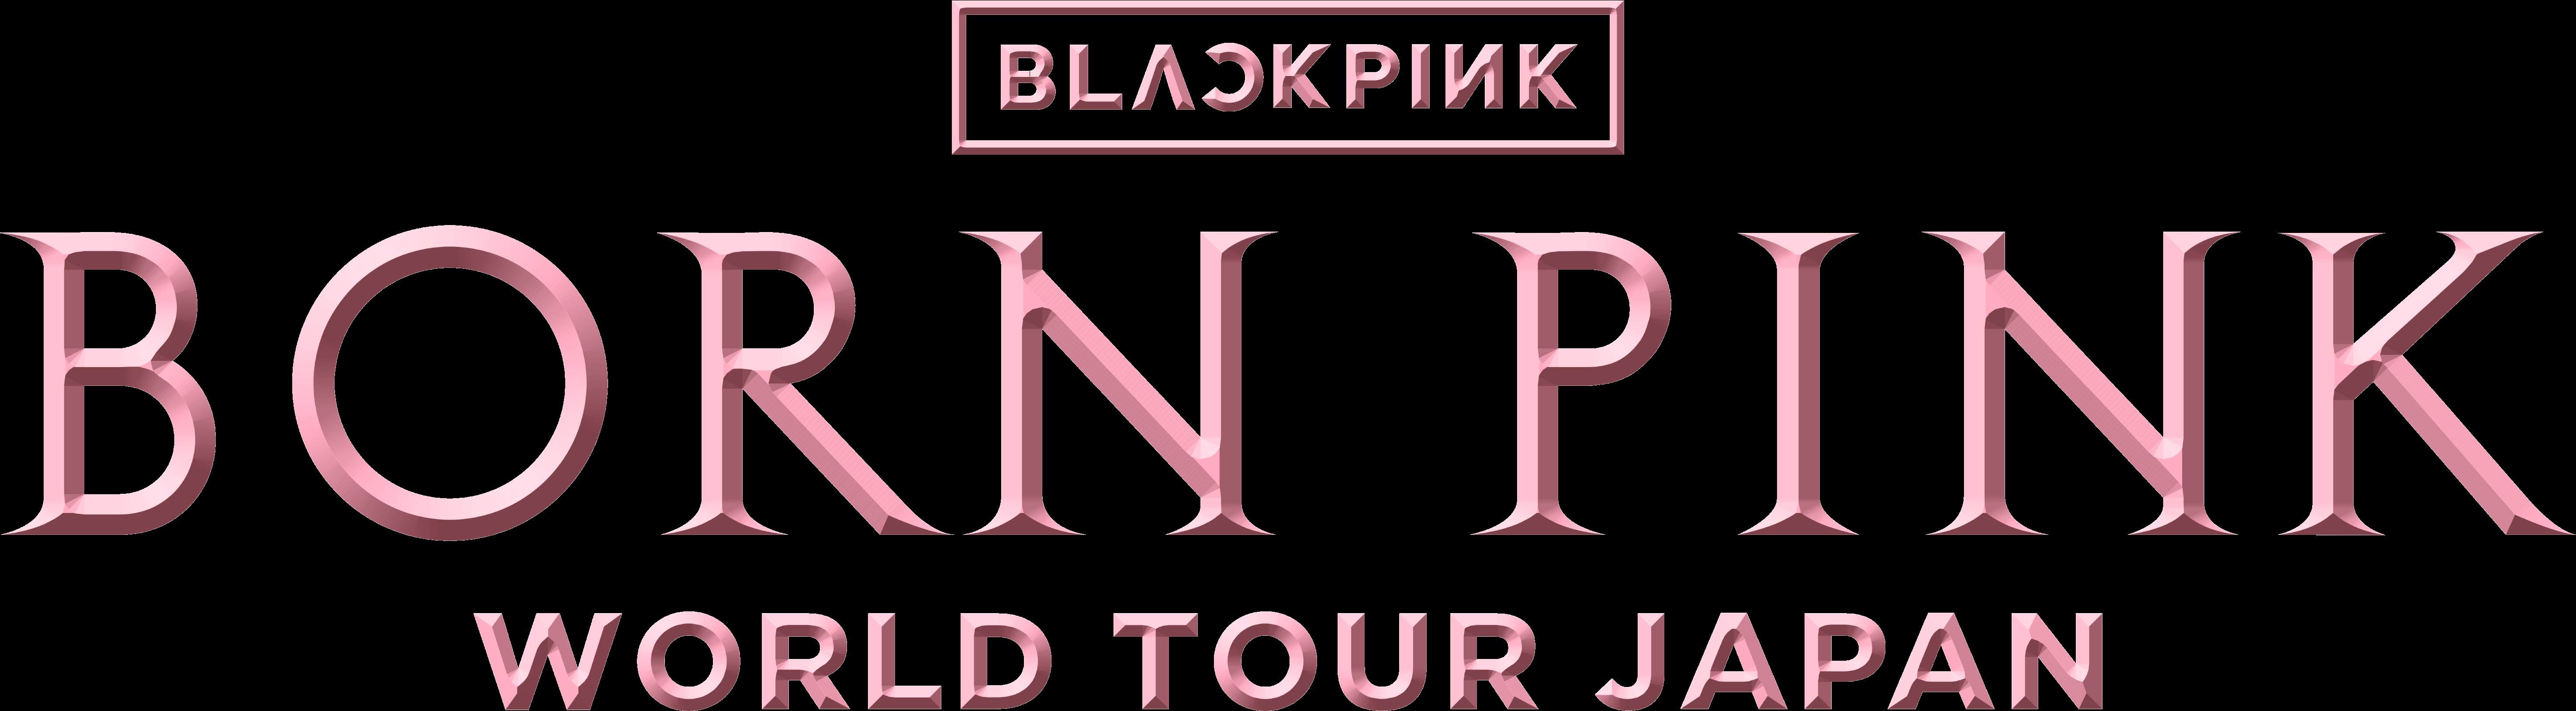 BLACKPINK WORLD TOUR [BORN PINK] JAPAN オフィシャルツアー in 大阪